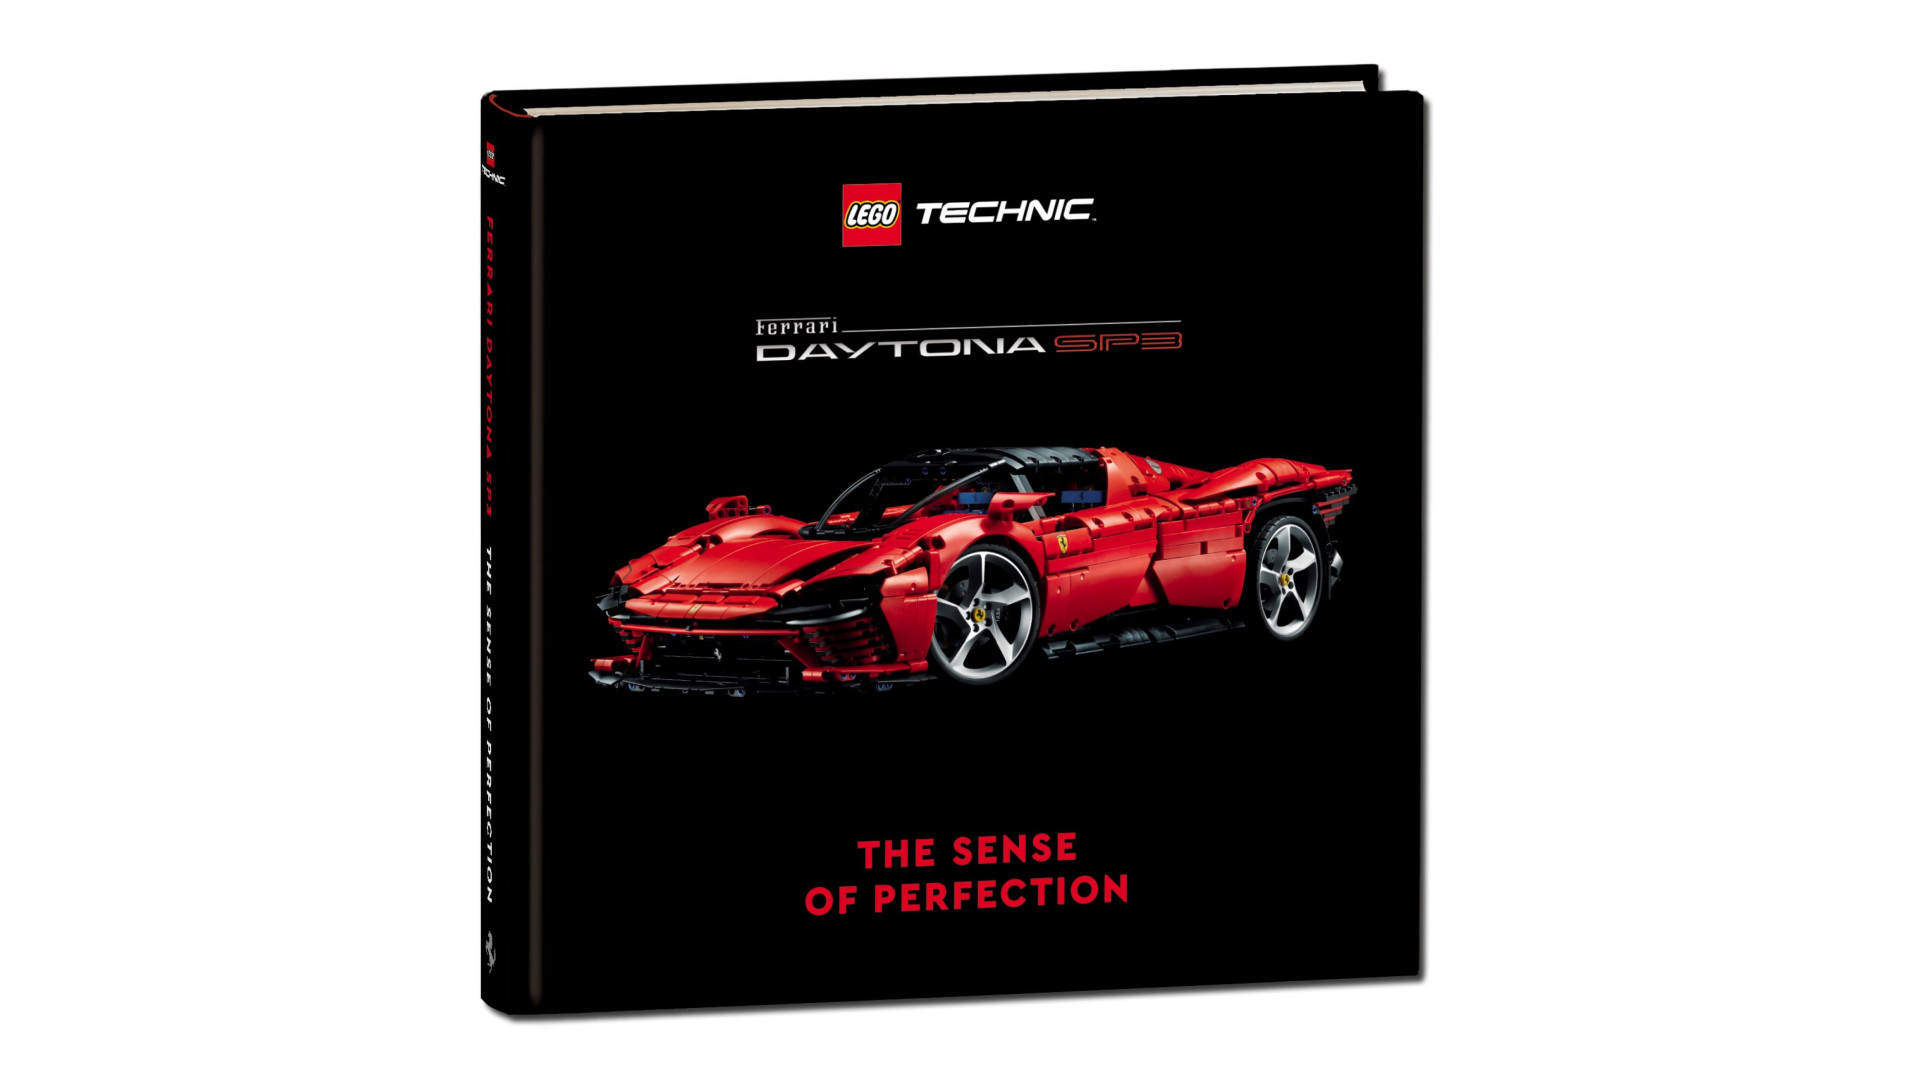 Acheter LEGO Ferrari Daytona SP3 The Sense of Perfection